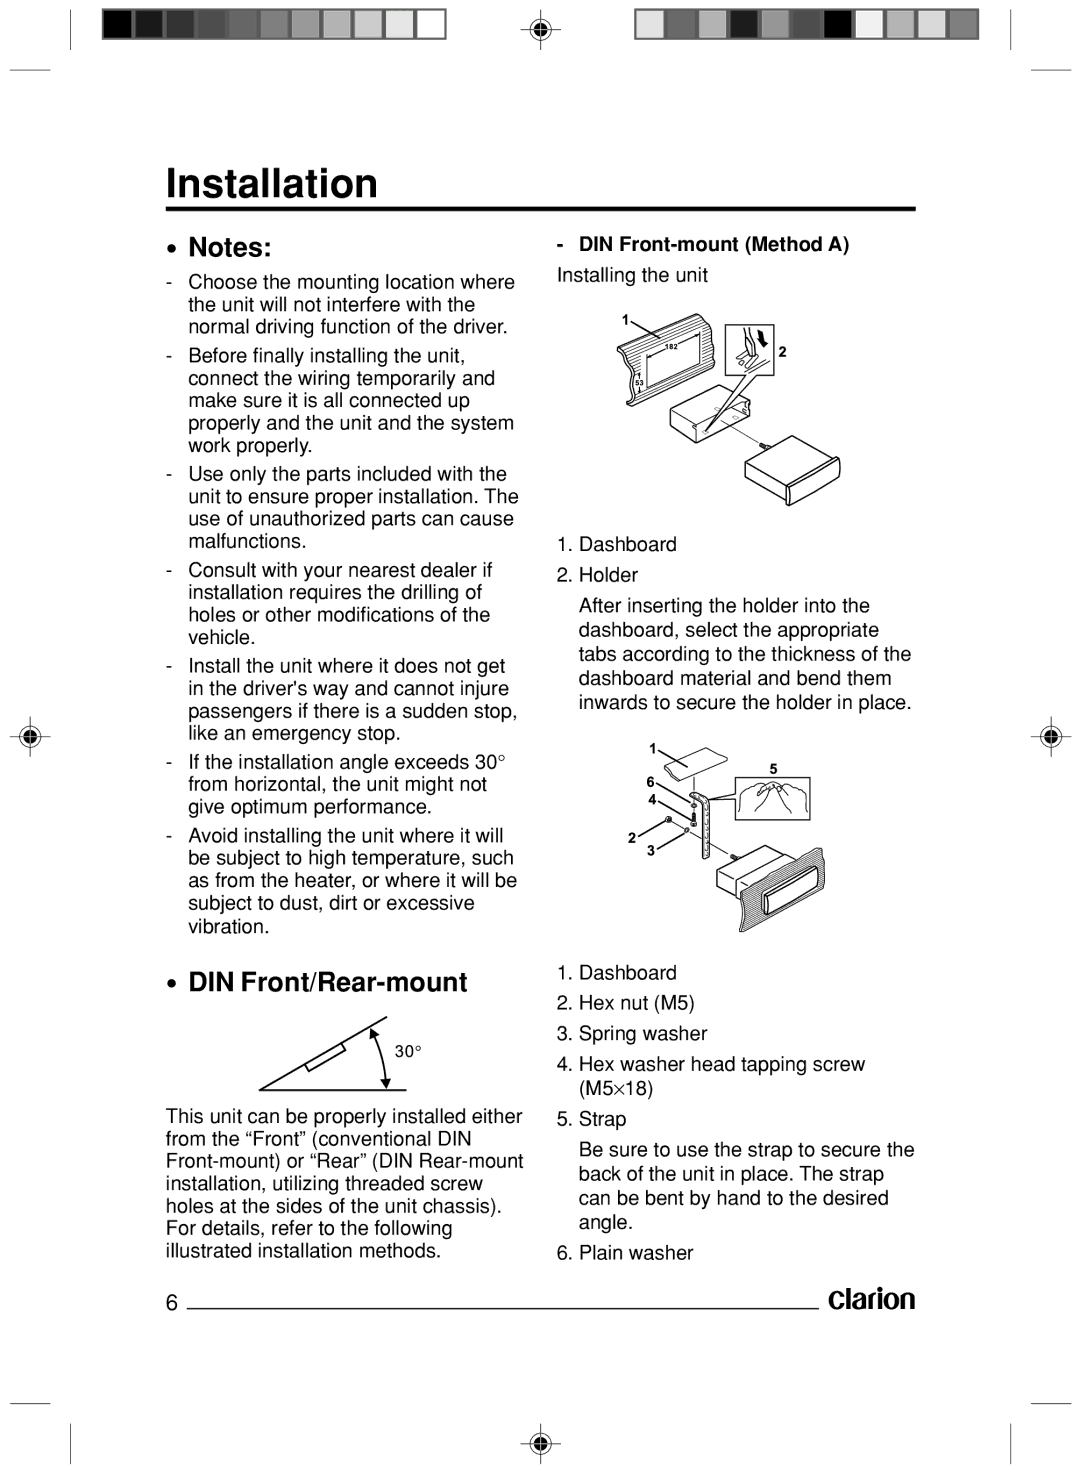 Clarion VS738 owner manual Installation, DIN Front/Rear-mount, DIN Front-mount Method a 